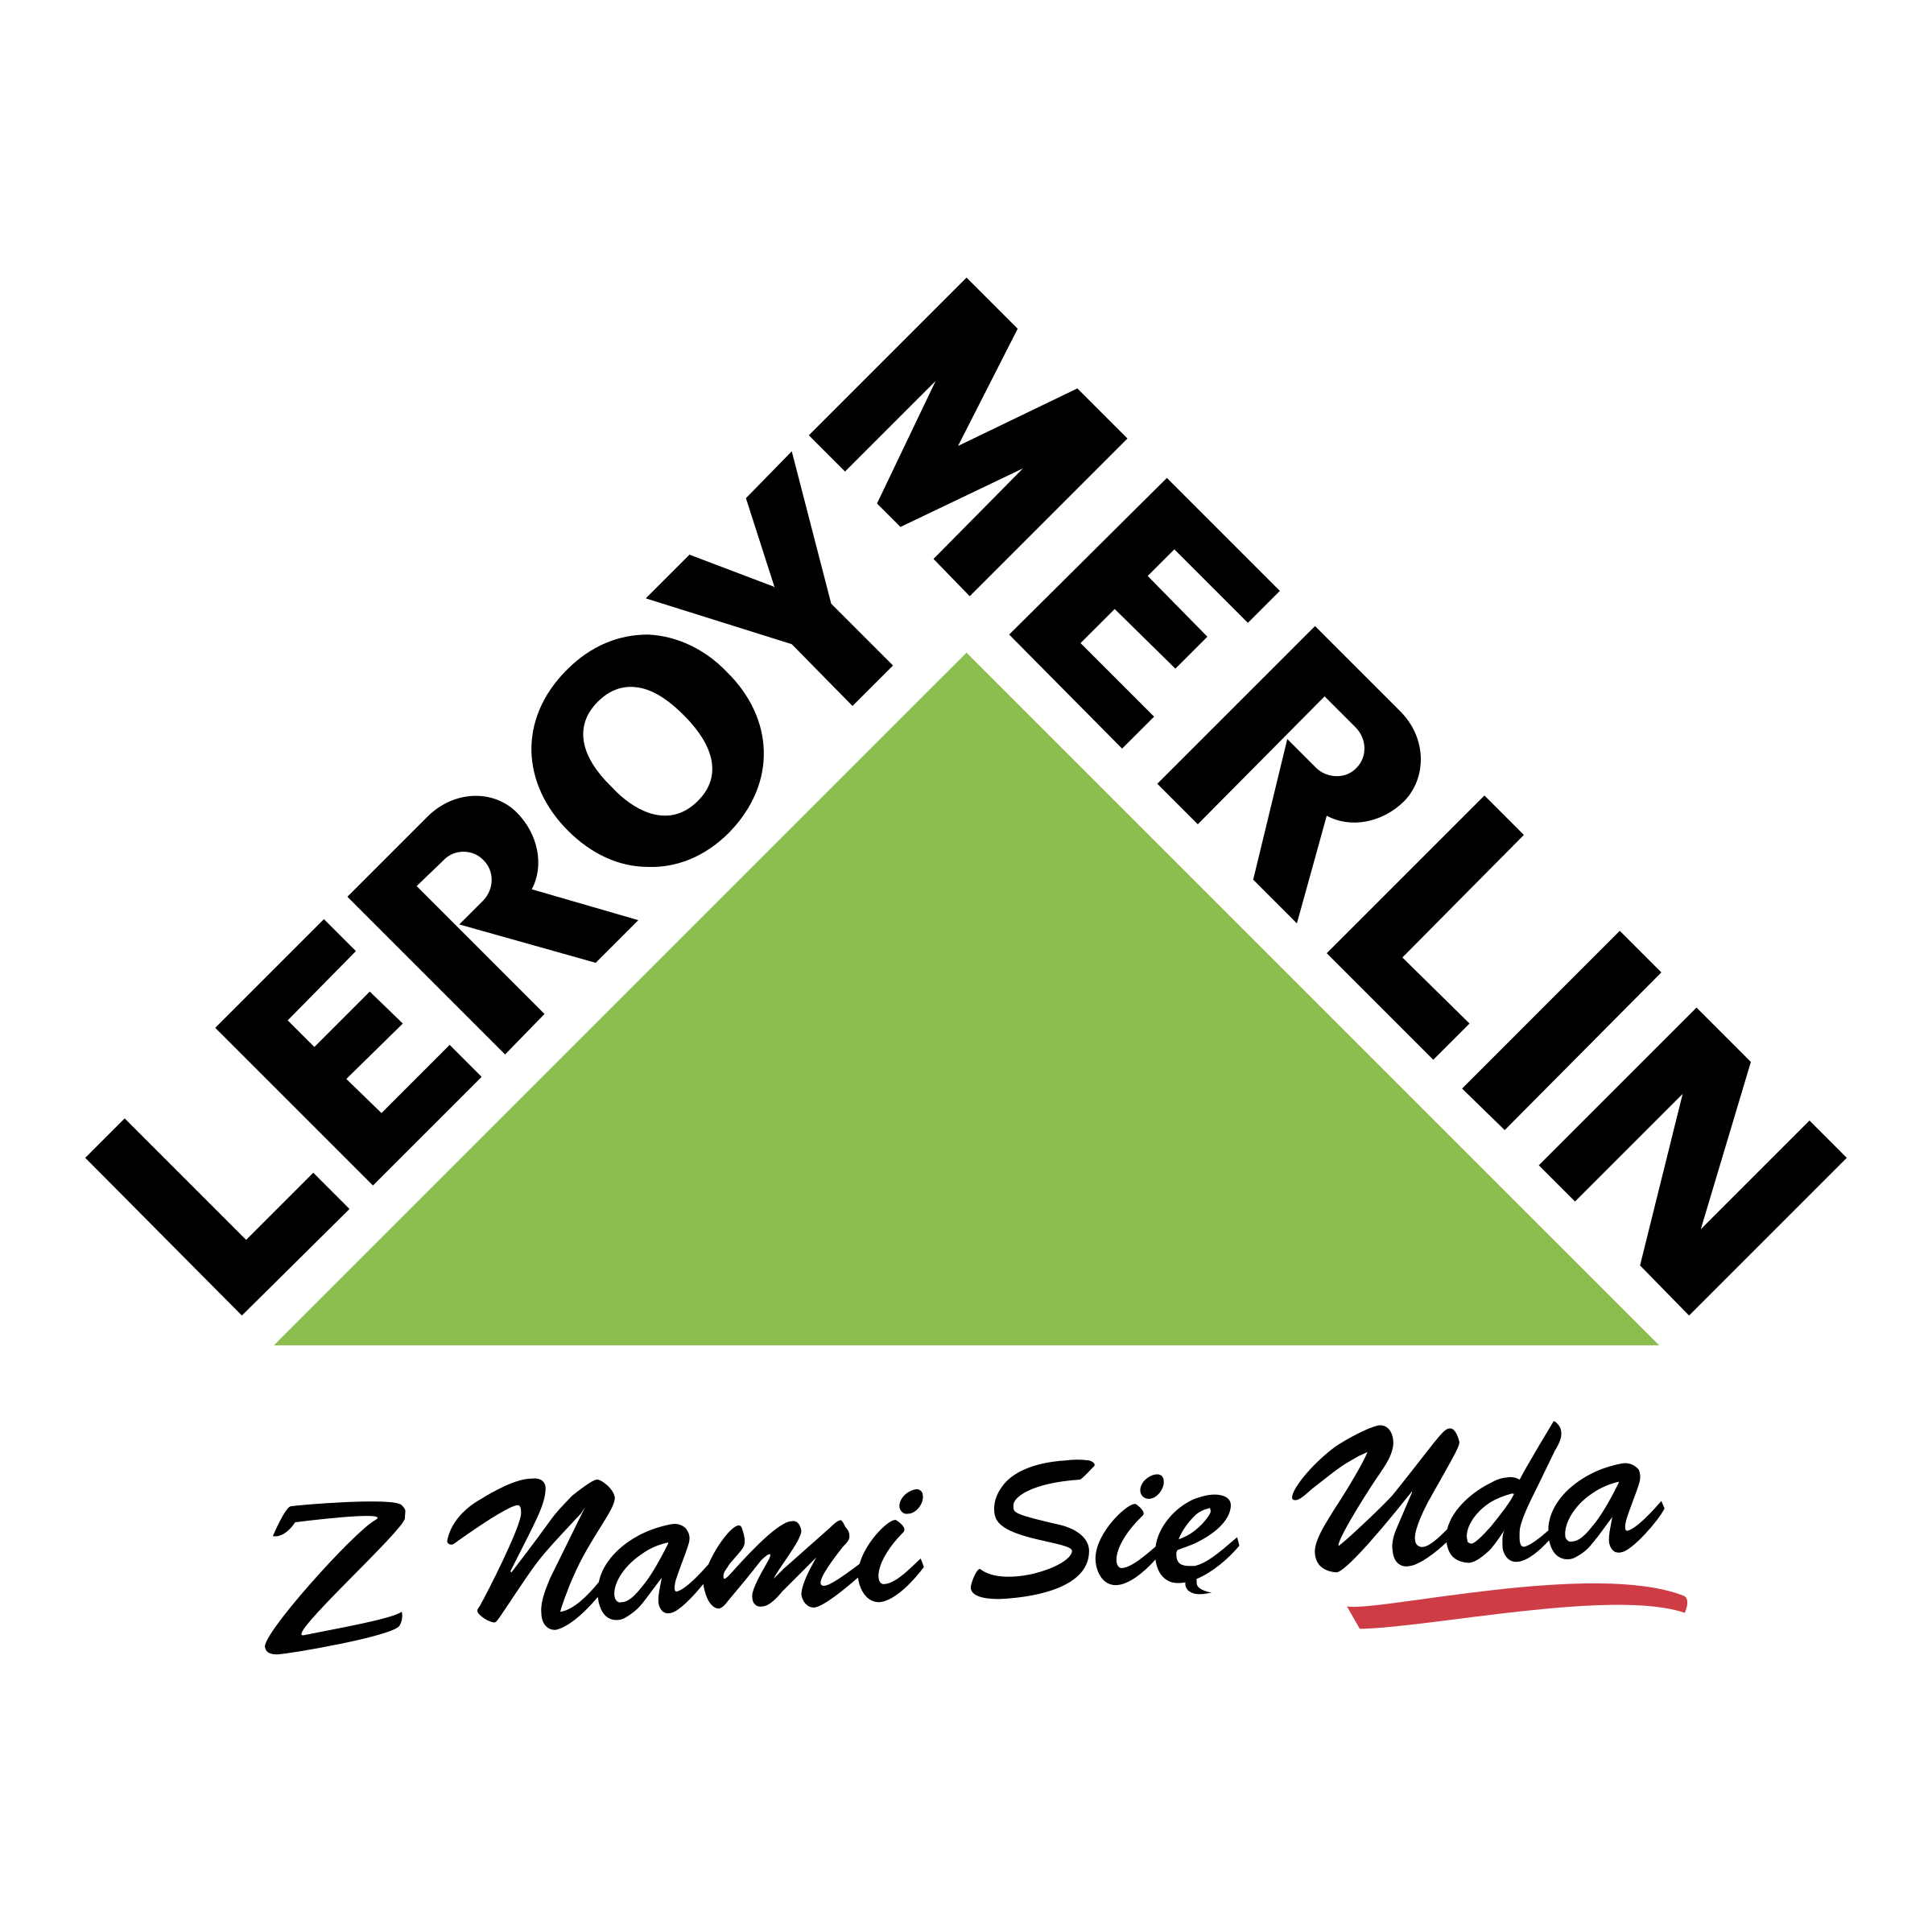 Merlin Logo - Leroy Merlin Logo PNG Transparent & SVG Vector - Freebie Supply